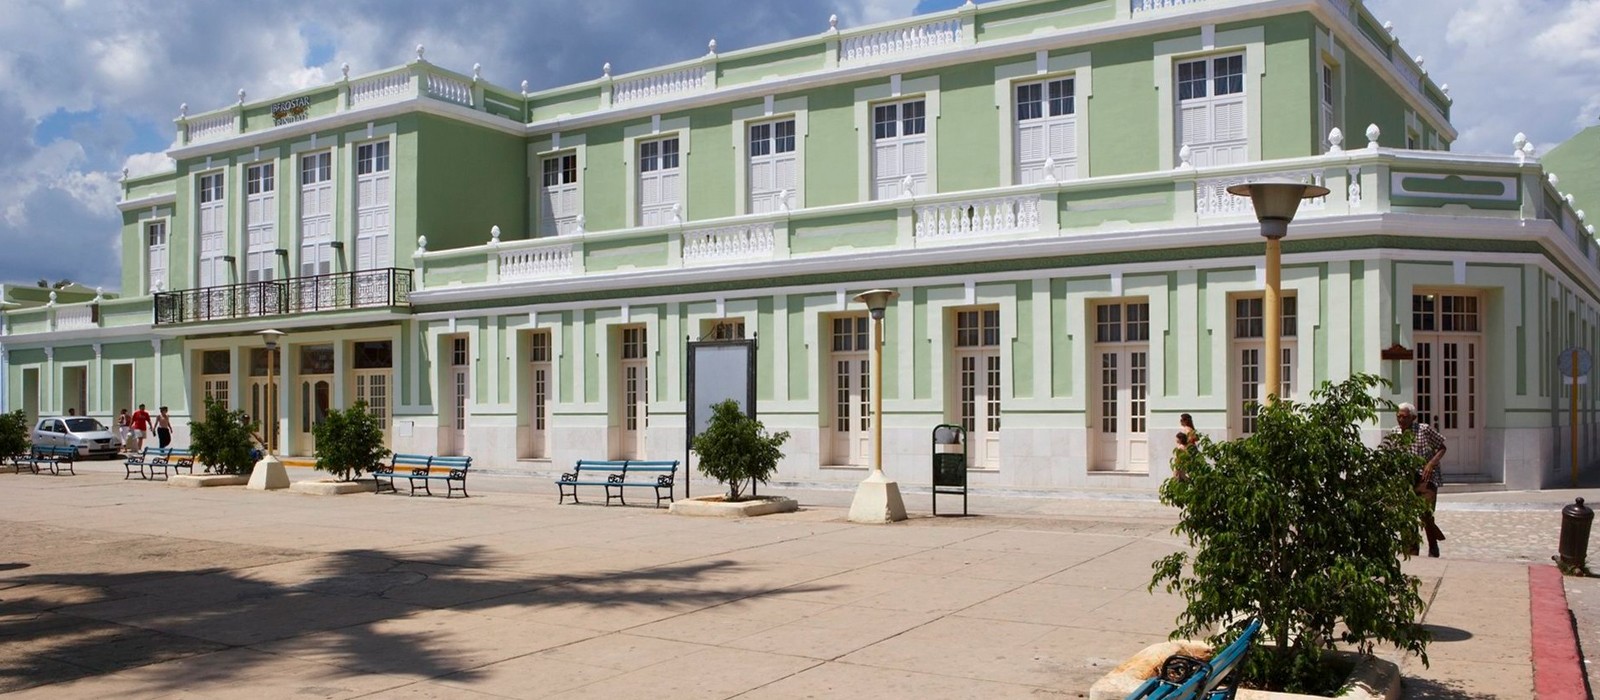 header - IBEROSTAR Grand Hotel Trinidad - Luxury Cuba Holiday Packages